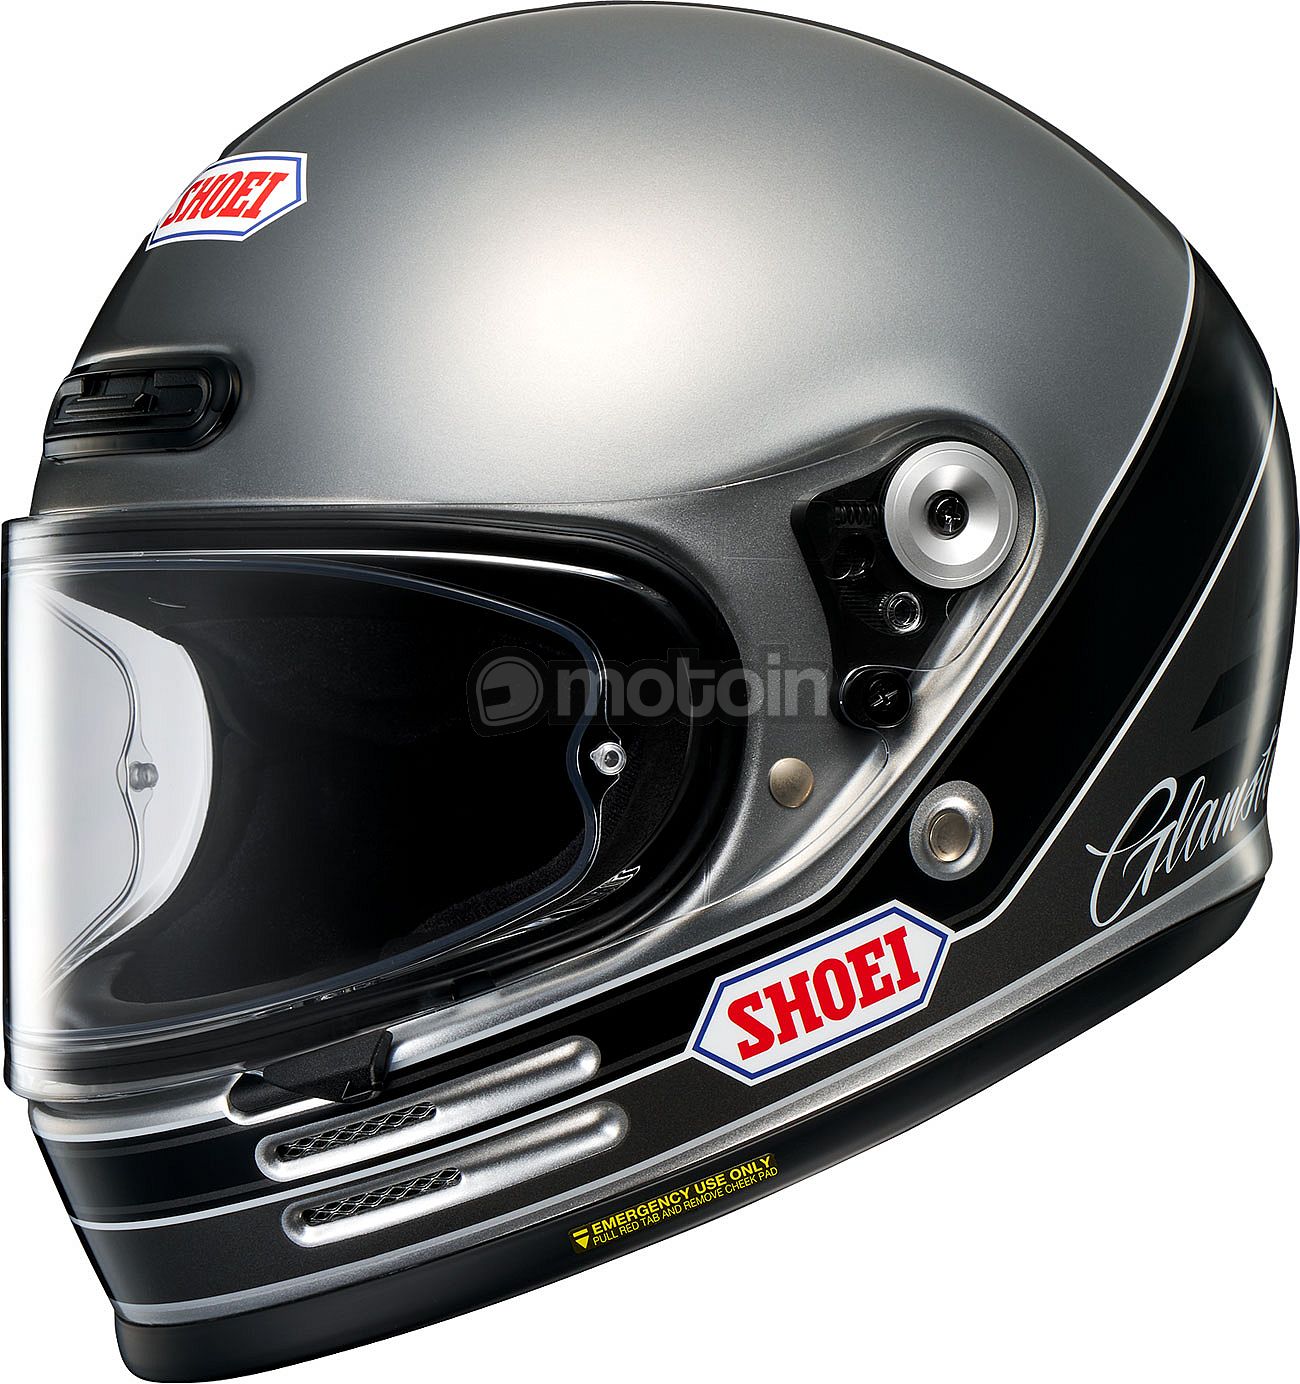 Shoei Glamster-06 Abiding, встроенный шлем